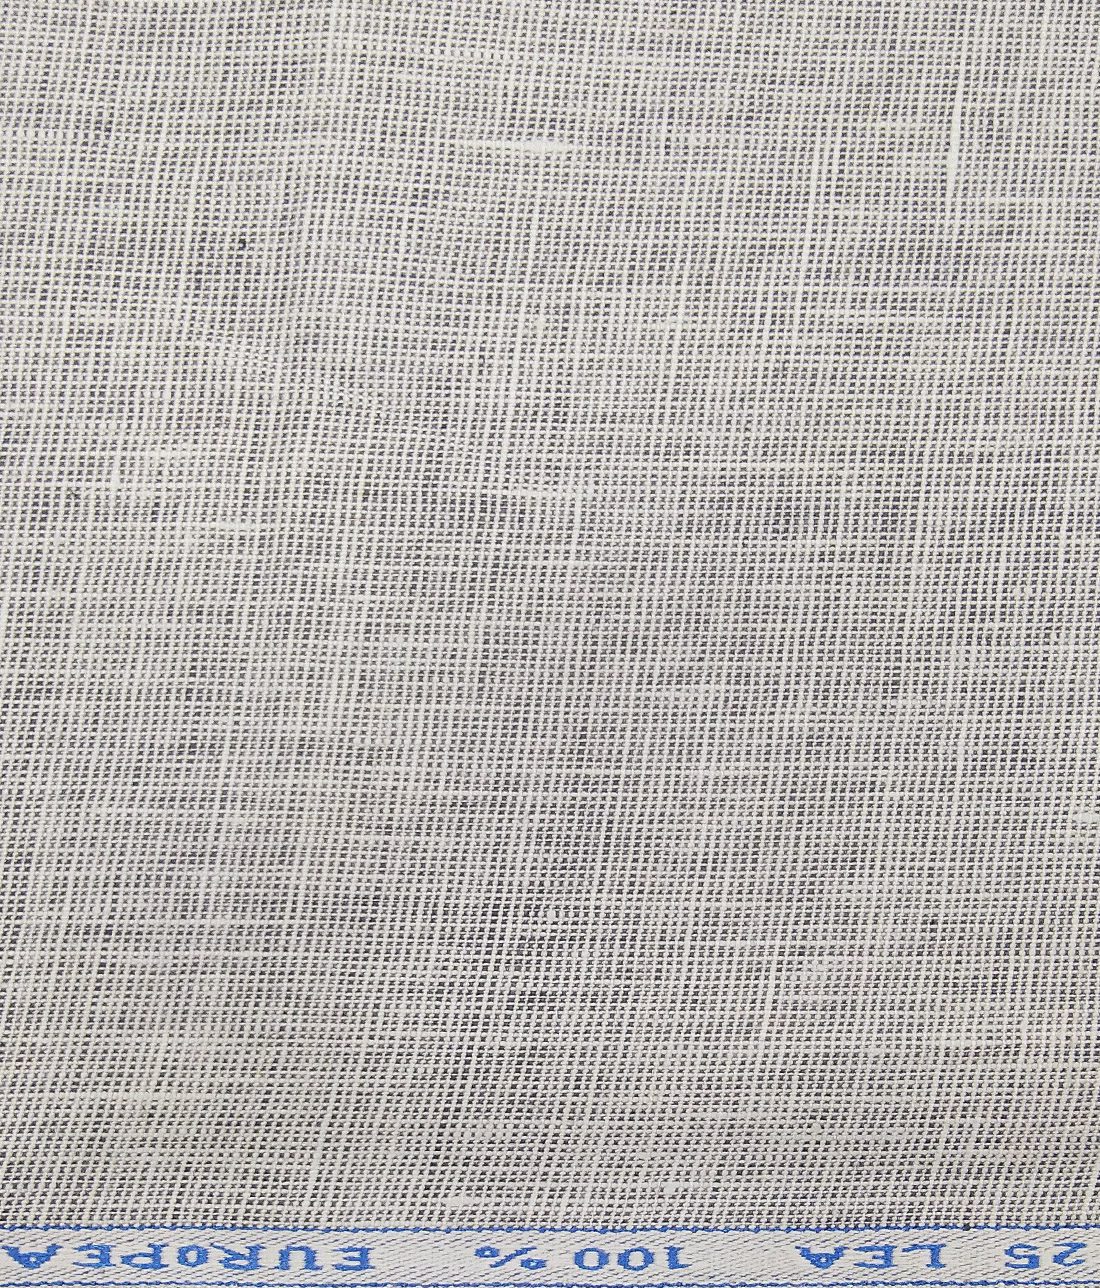 J.Hampstead Men's Light Grey 25 LEA 100% European Linen Strucutred Unstitched Suiting Fabric (3 Meter)